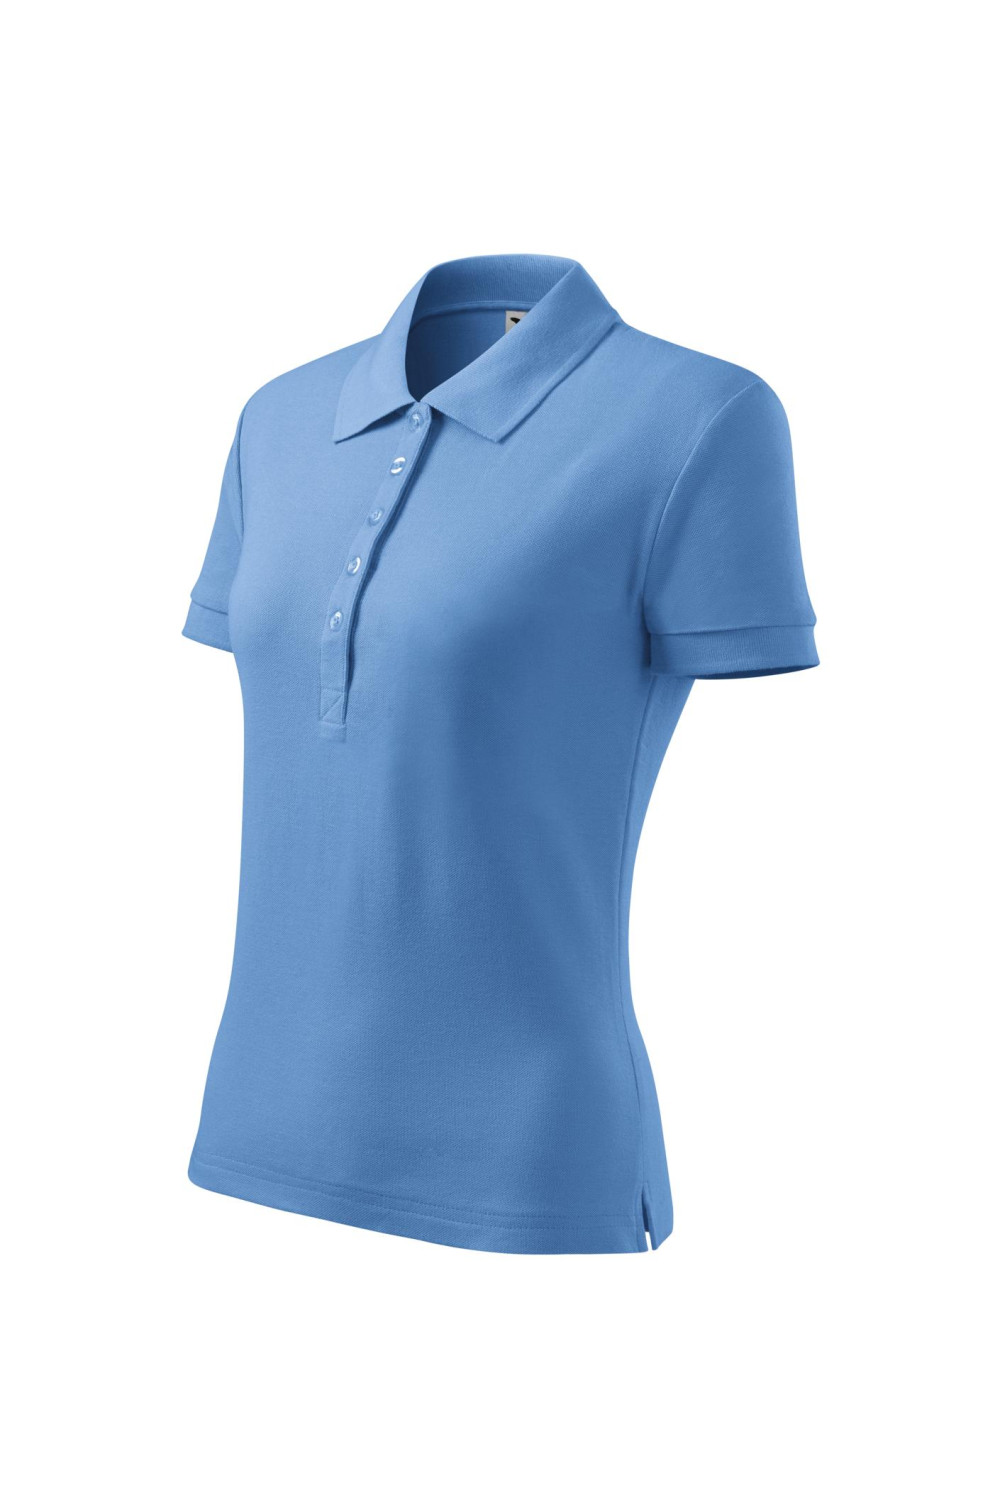 COTTON 213 MALFINI ADLER Koszulka Polo damska klasyczna 100% bawełna błękitny